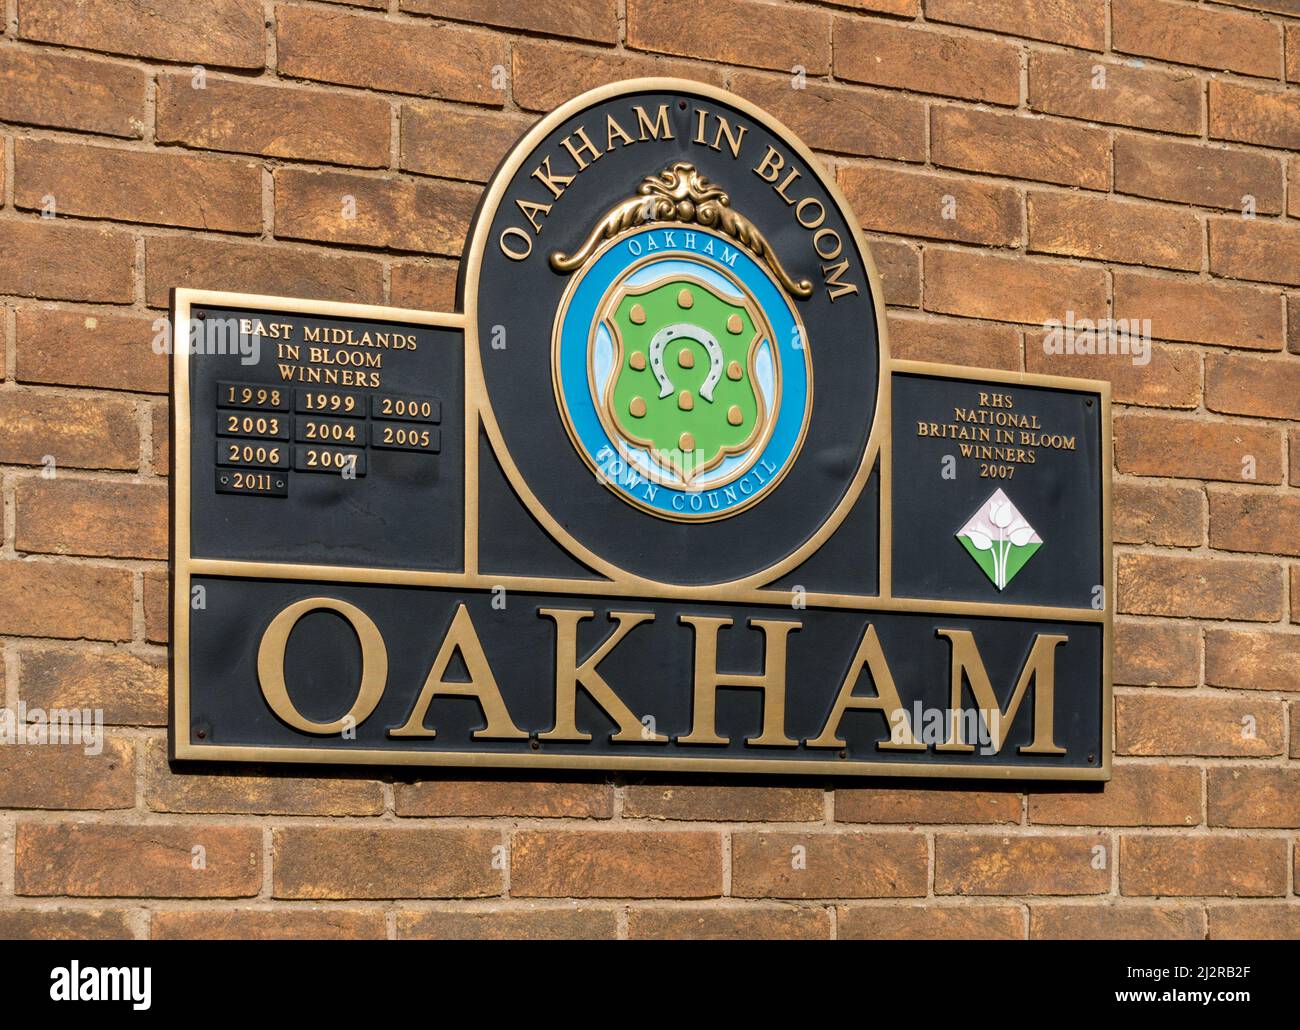 Wandtafel zur Feier von Oakham in Bloom Erfolge in den East Midlands in Bloom & RHS National Britain in Bloom Awards Contests, Oakham, Rutland, England Stockfoto